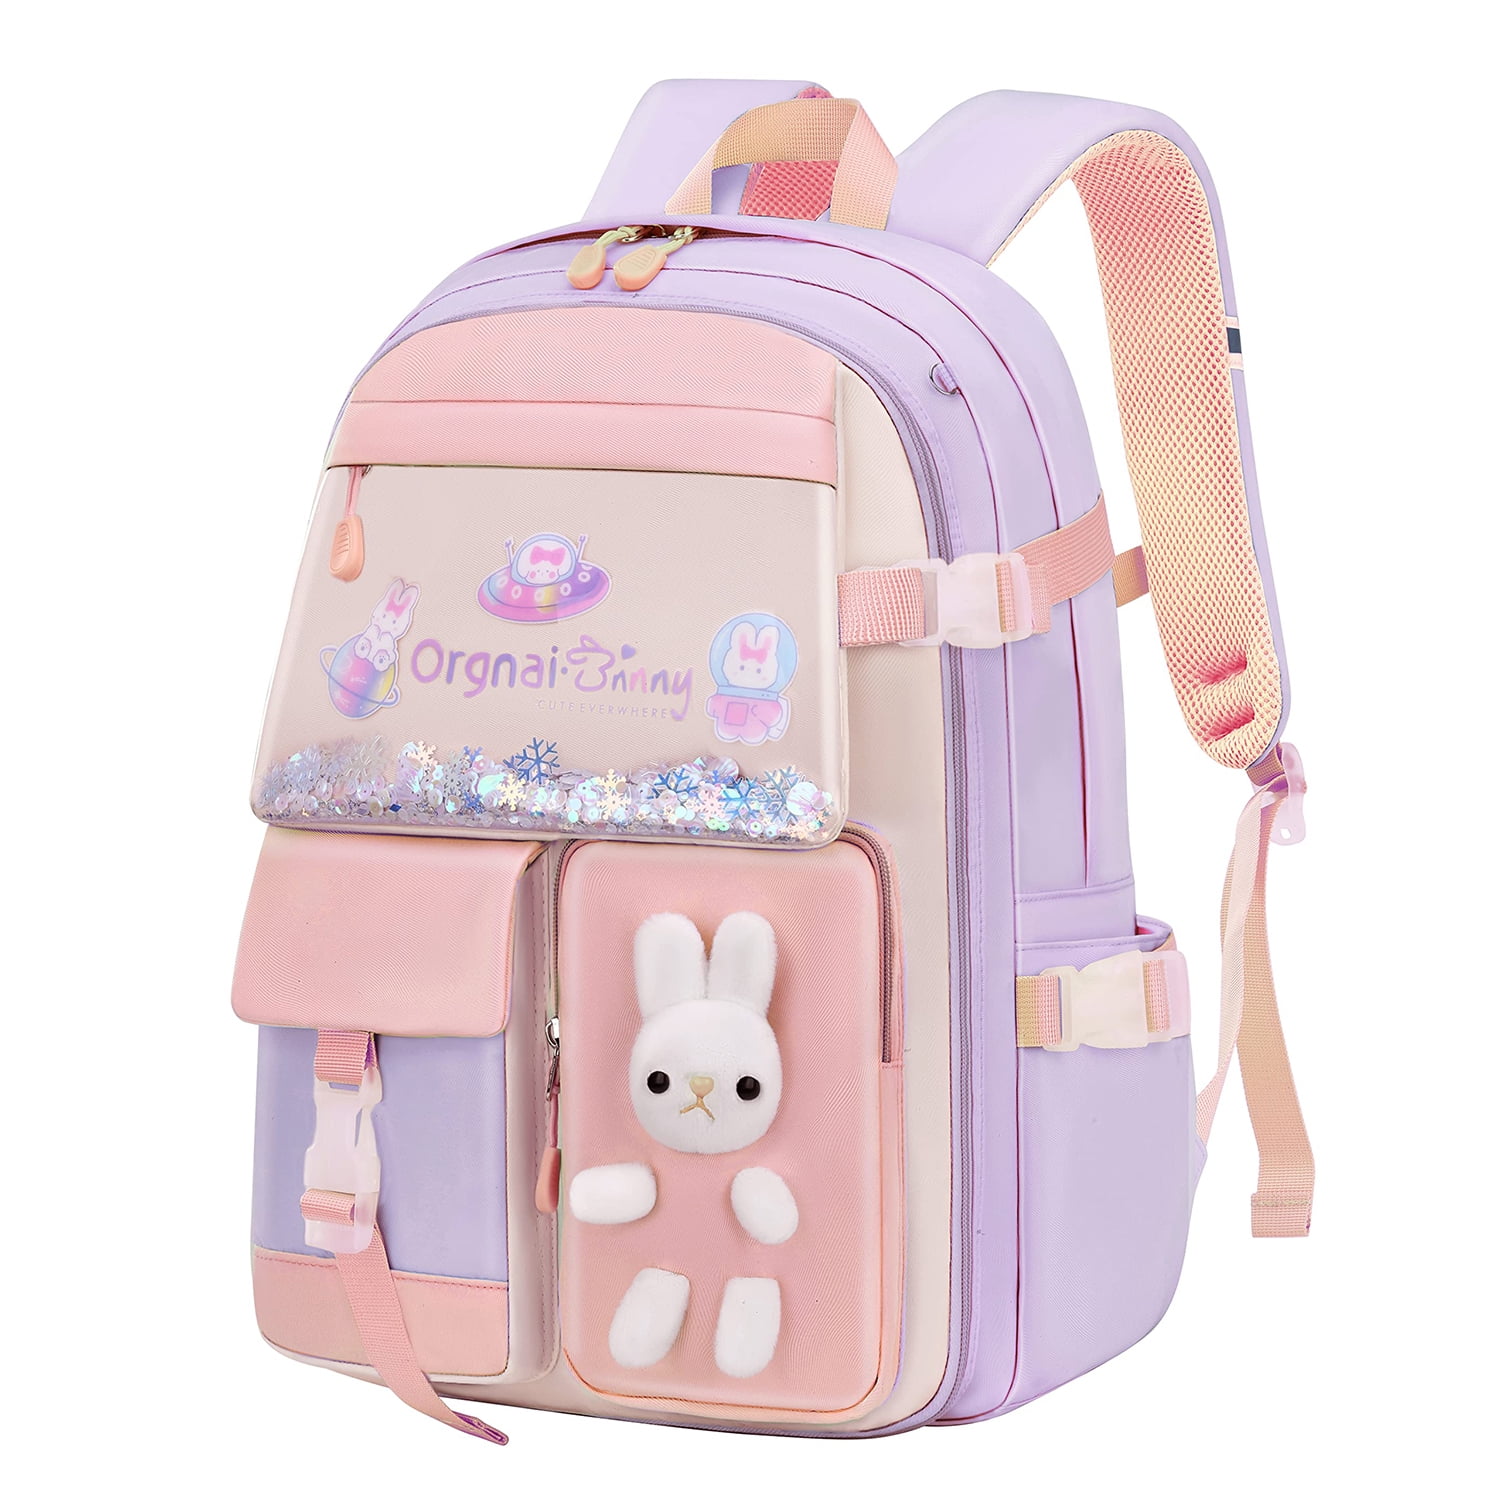 Sanmadrola Kids Backpacks for Girls Bunny Elementary School Backpack Cute Preschool Girls Backpack Laptop Bag Kindergarten School Bookbag, Pink